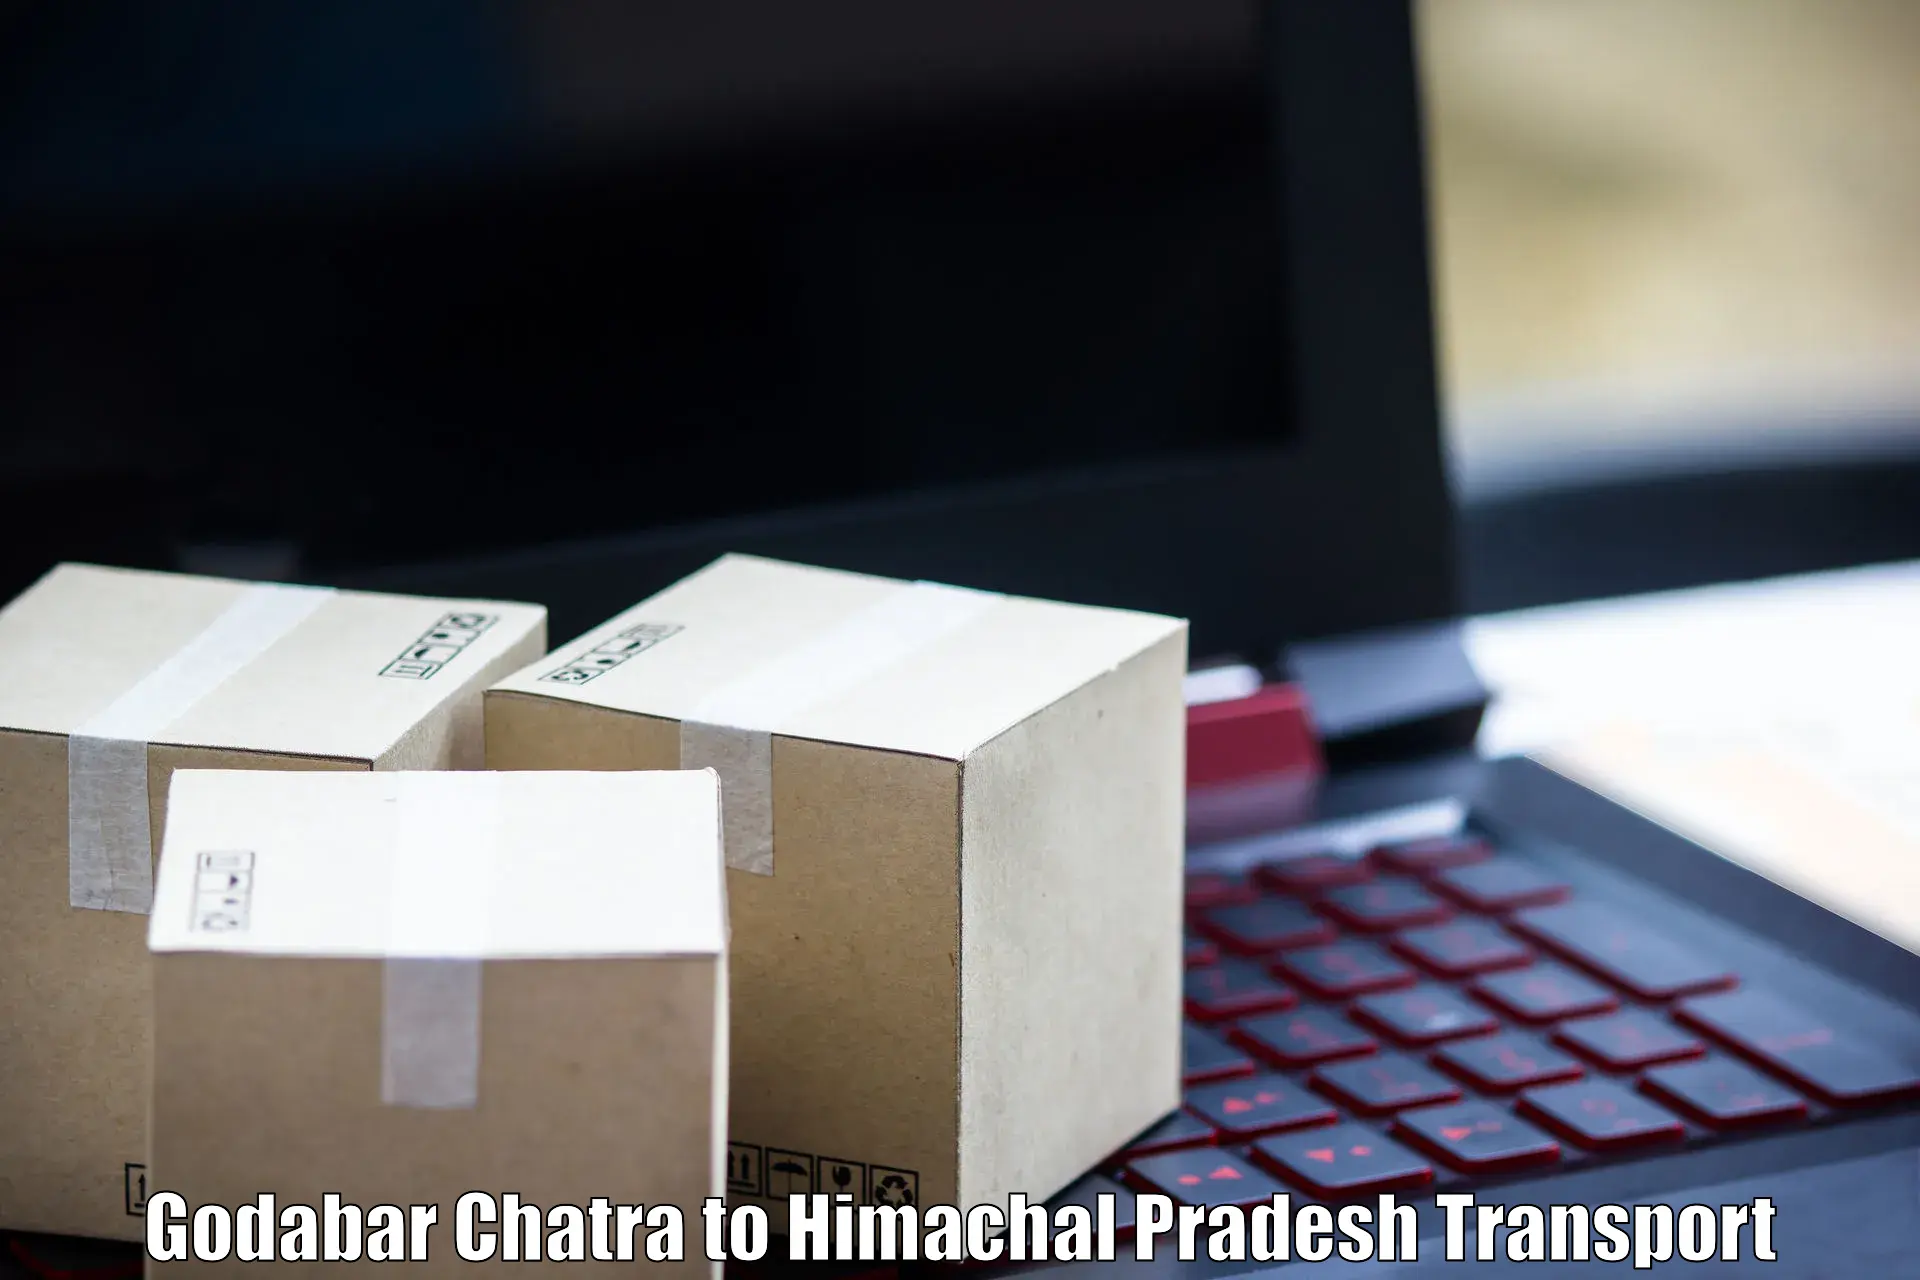 Truck transport companies in India Godabar Chatra to Manali